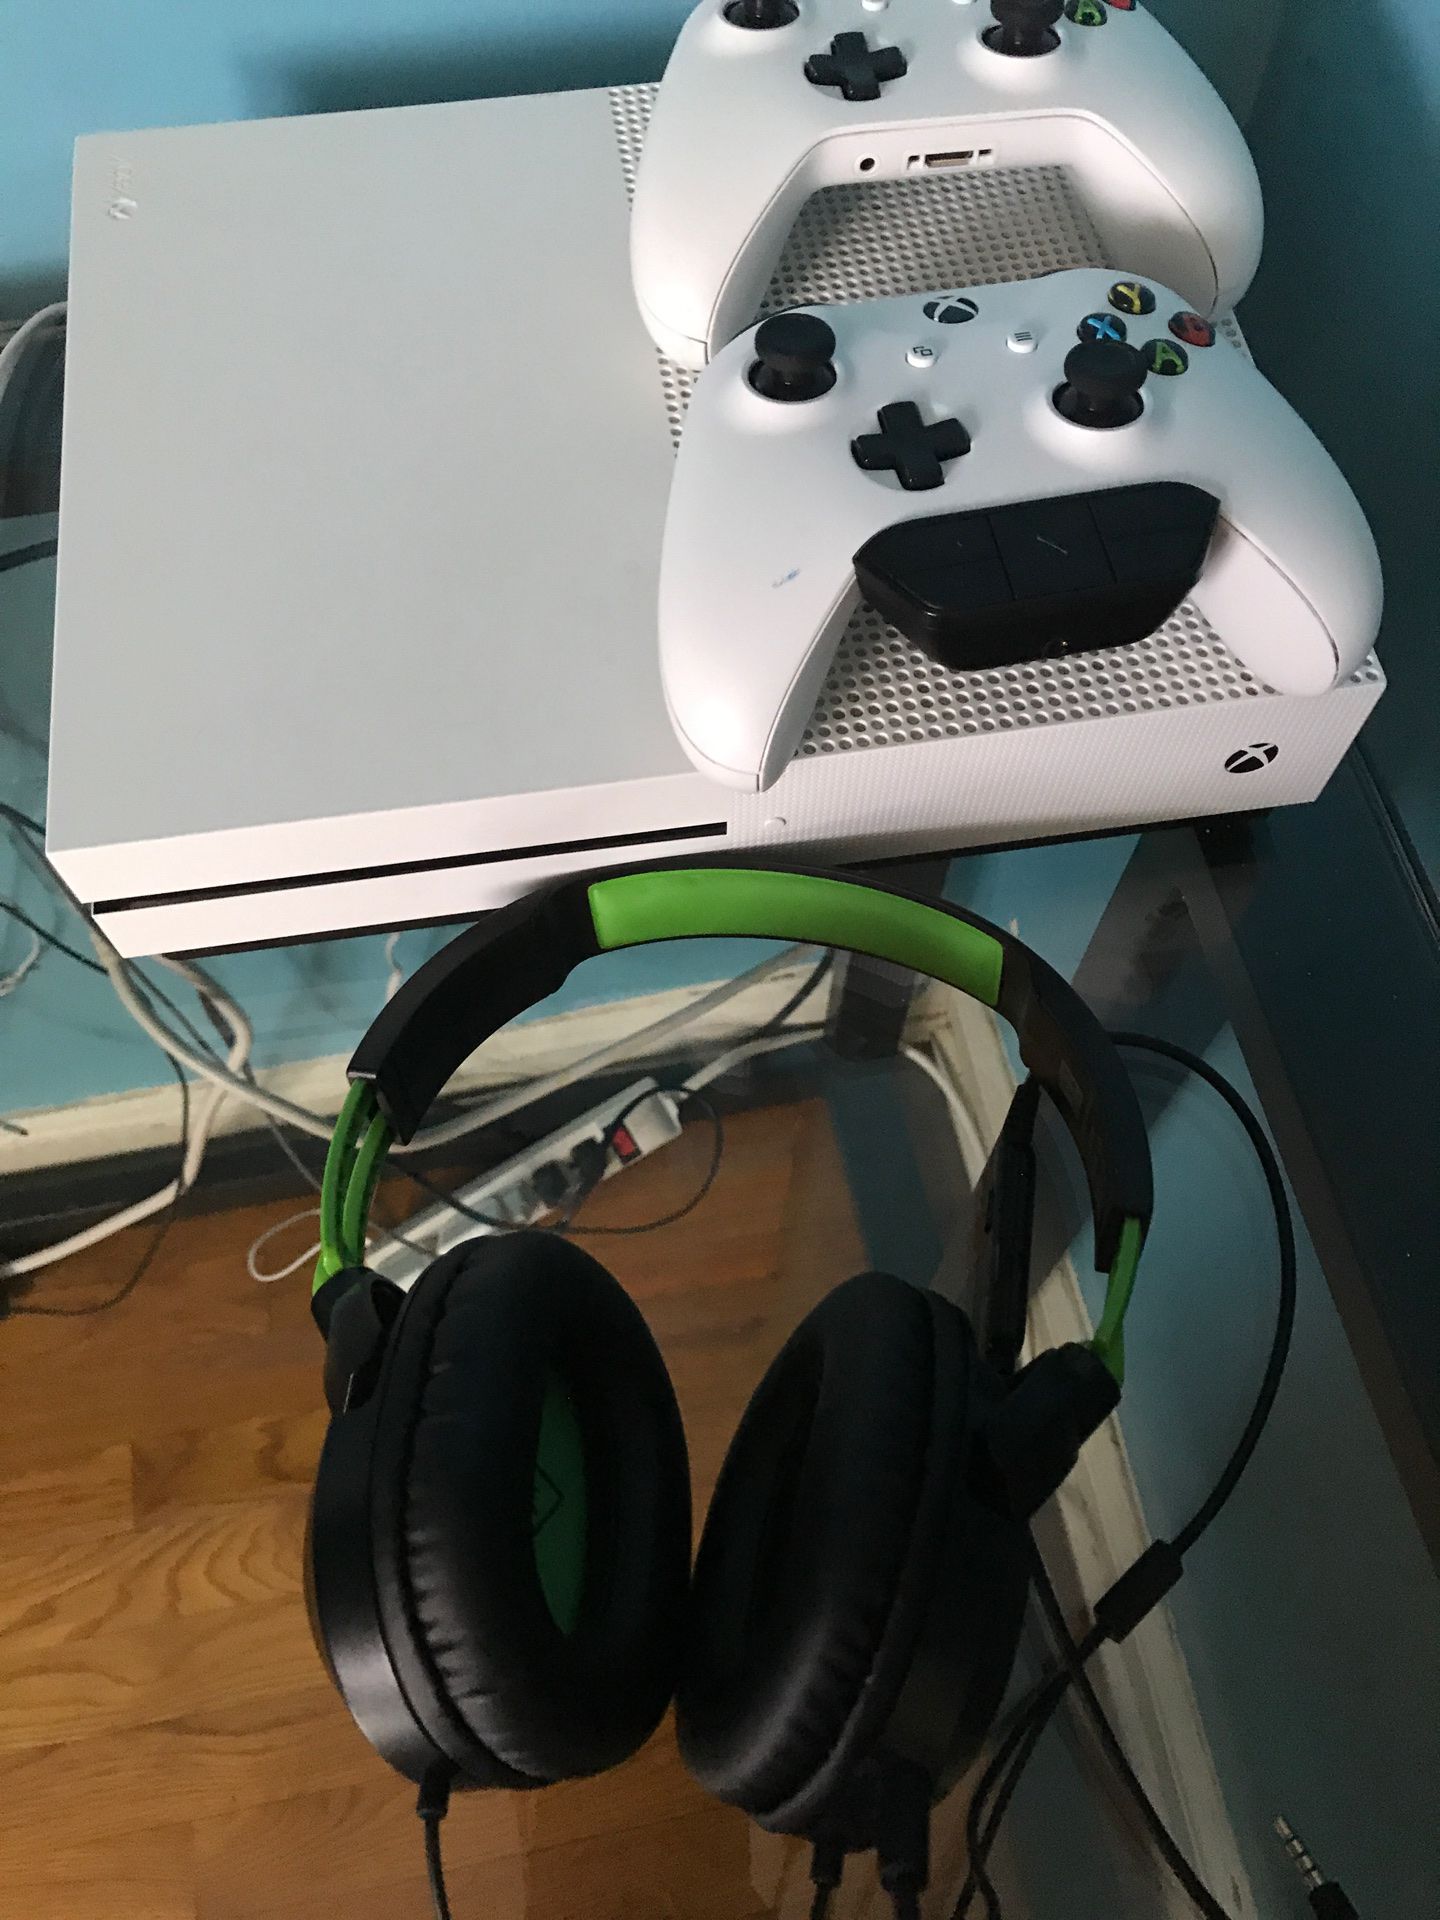 Xbox One S 500gb Turtle Beach Headset